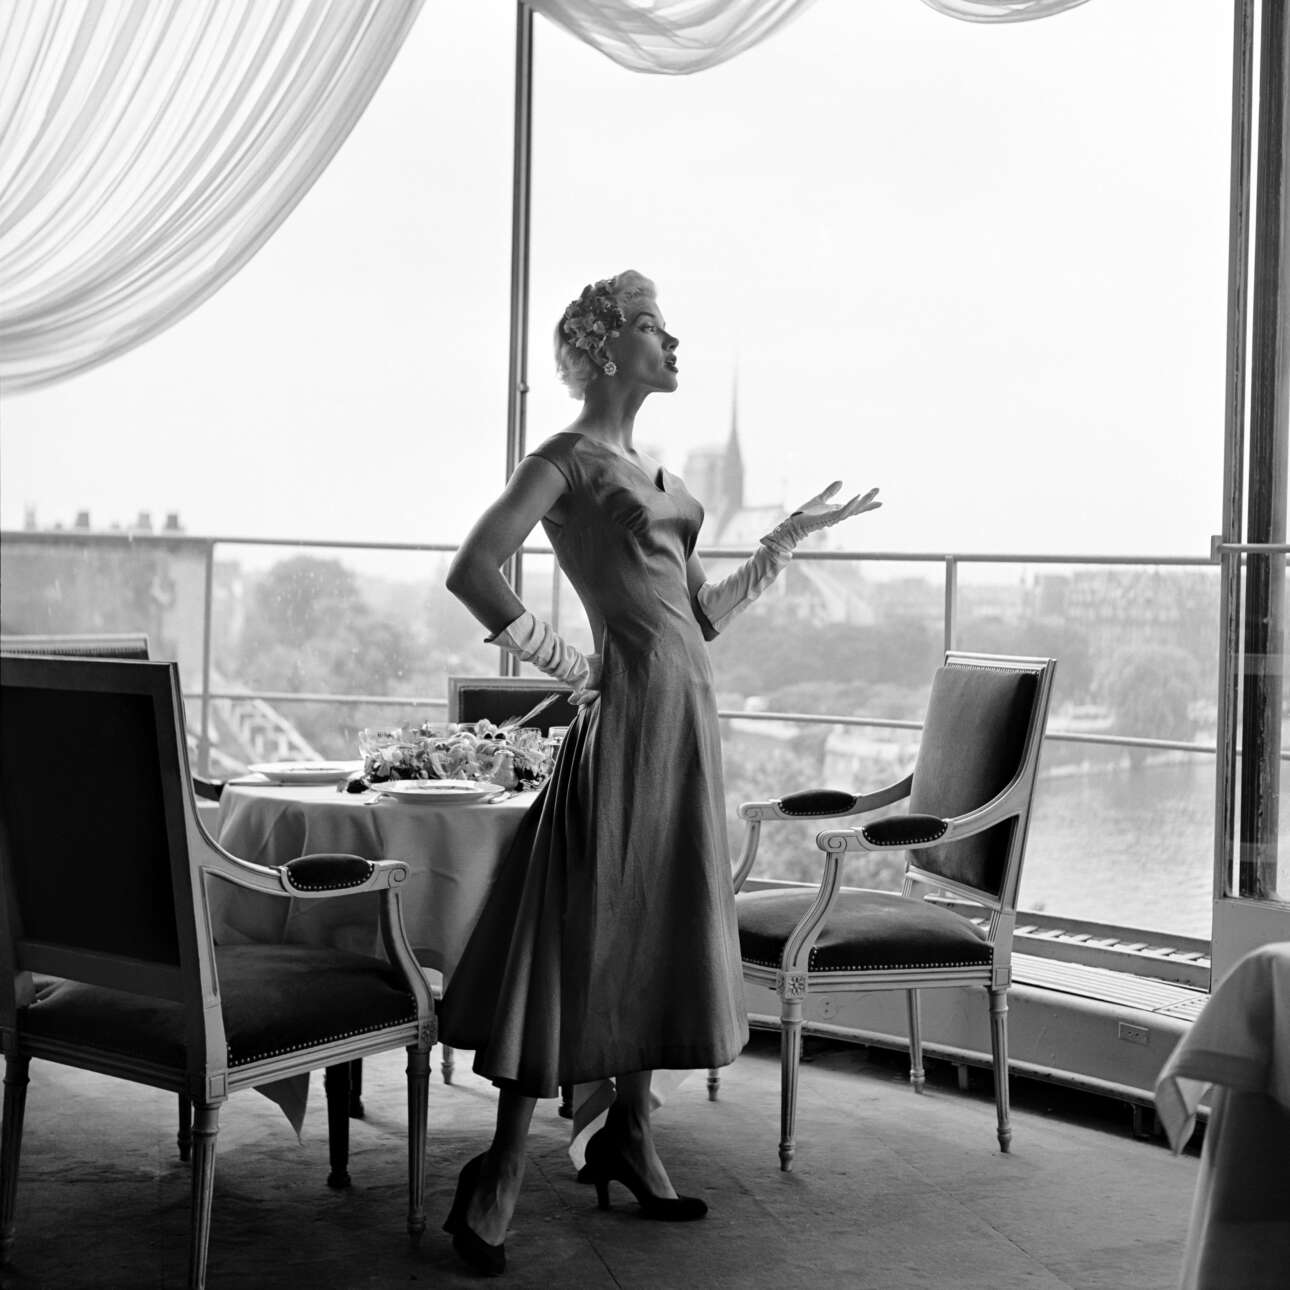 Givenchy υψηλής ραπτικής στο εστιατόριο Tour d'Argent με θέα στον Σηκουάνα και την Παναγία των Παρισίων 